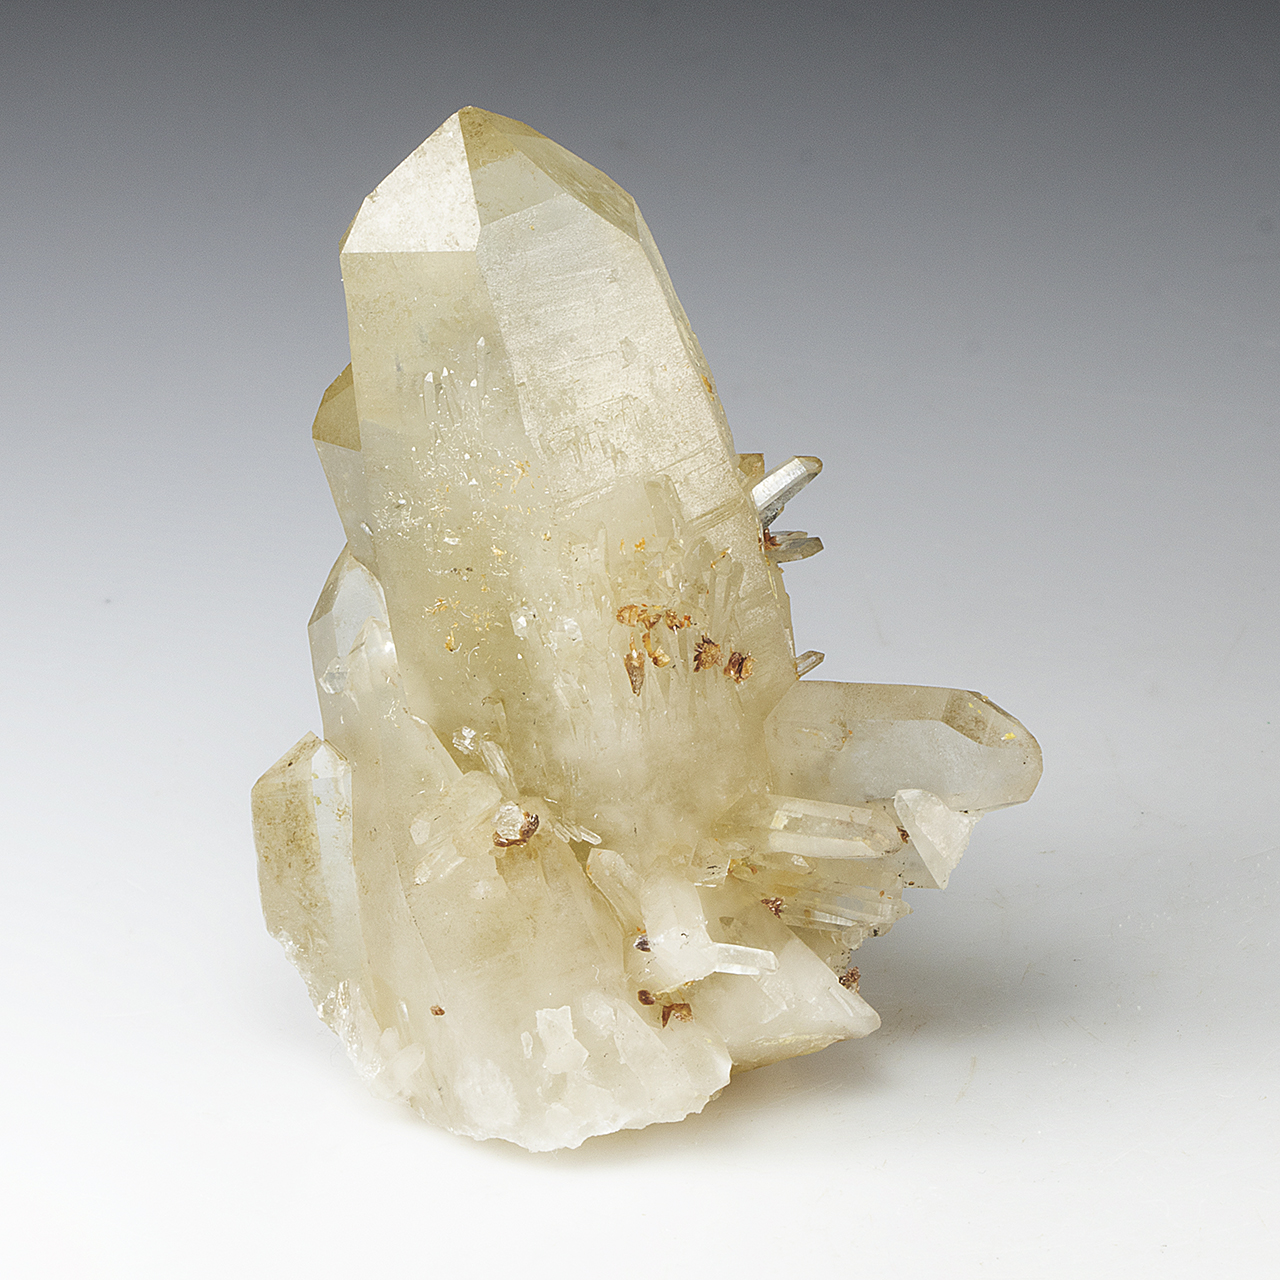 Quartz-(Japan-law-twin) with Mimetite - Minerals For Sale - #3631029